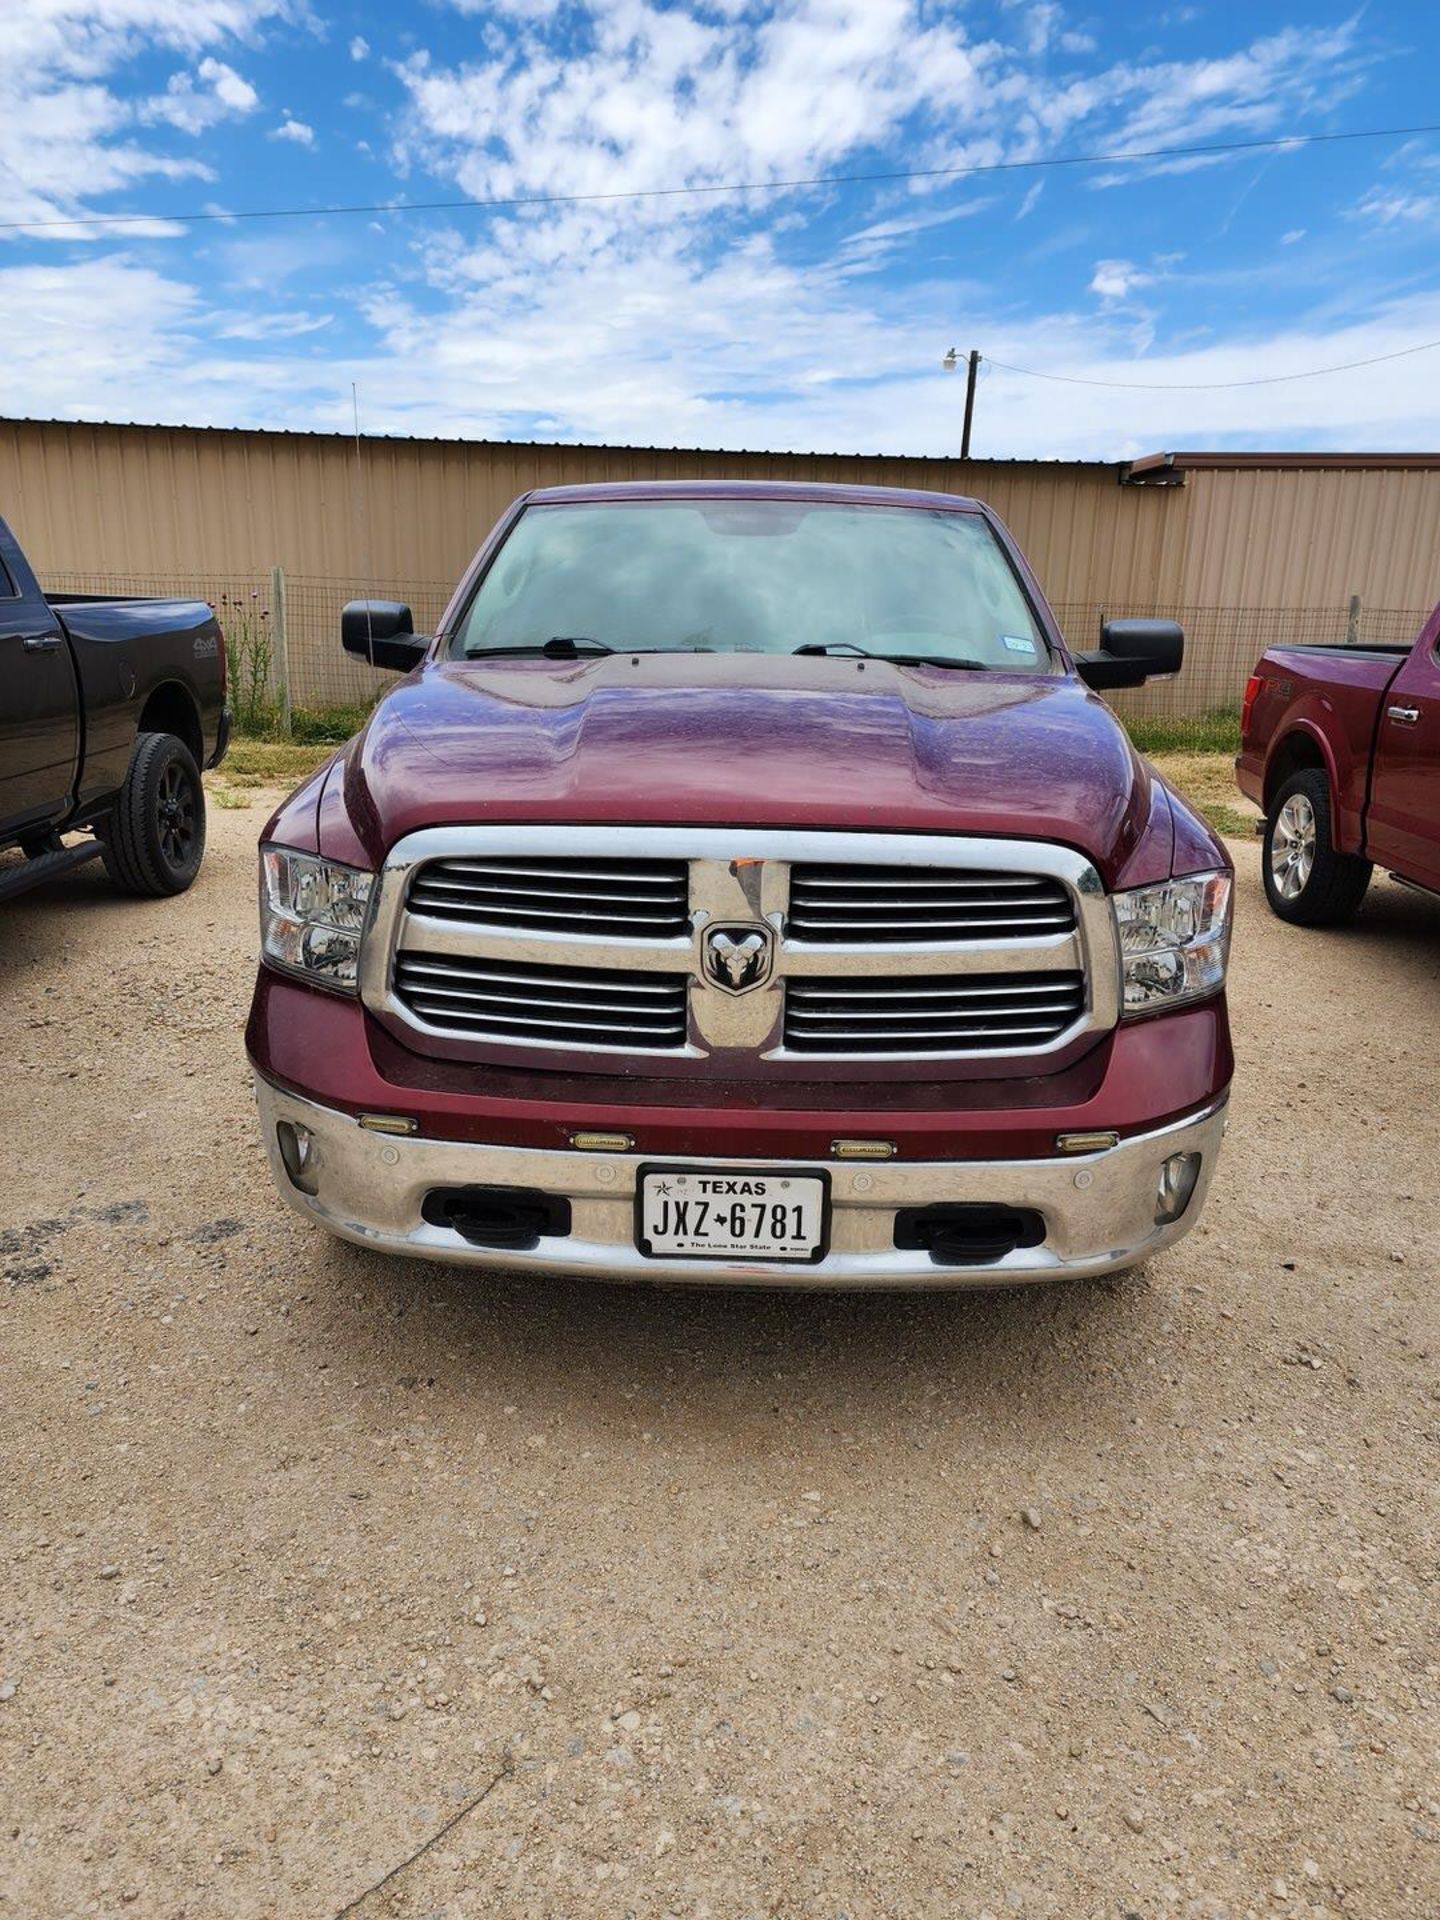 2017 Dodge Ram 1500 Hemi Truck (Gasoline) Mileage: 91,258 ; Vin: 1C6RR7LT6HS823356; TX Plate: JXZ- - Image 2 of 18